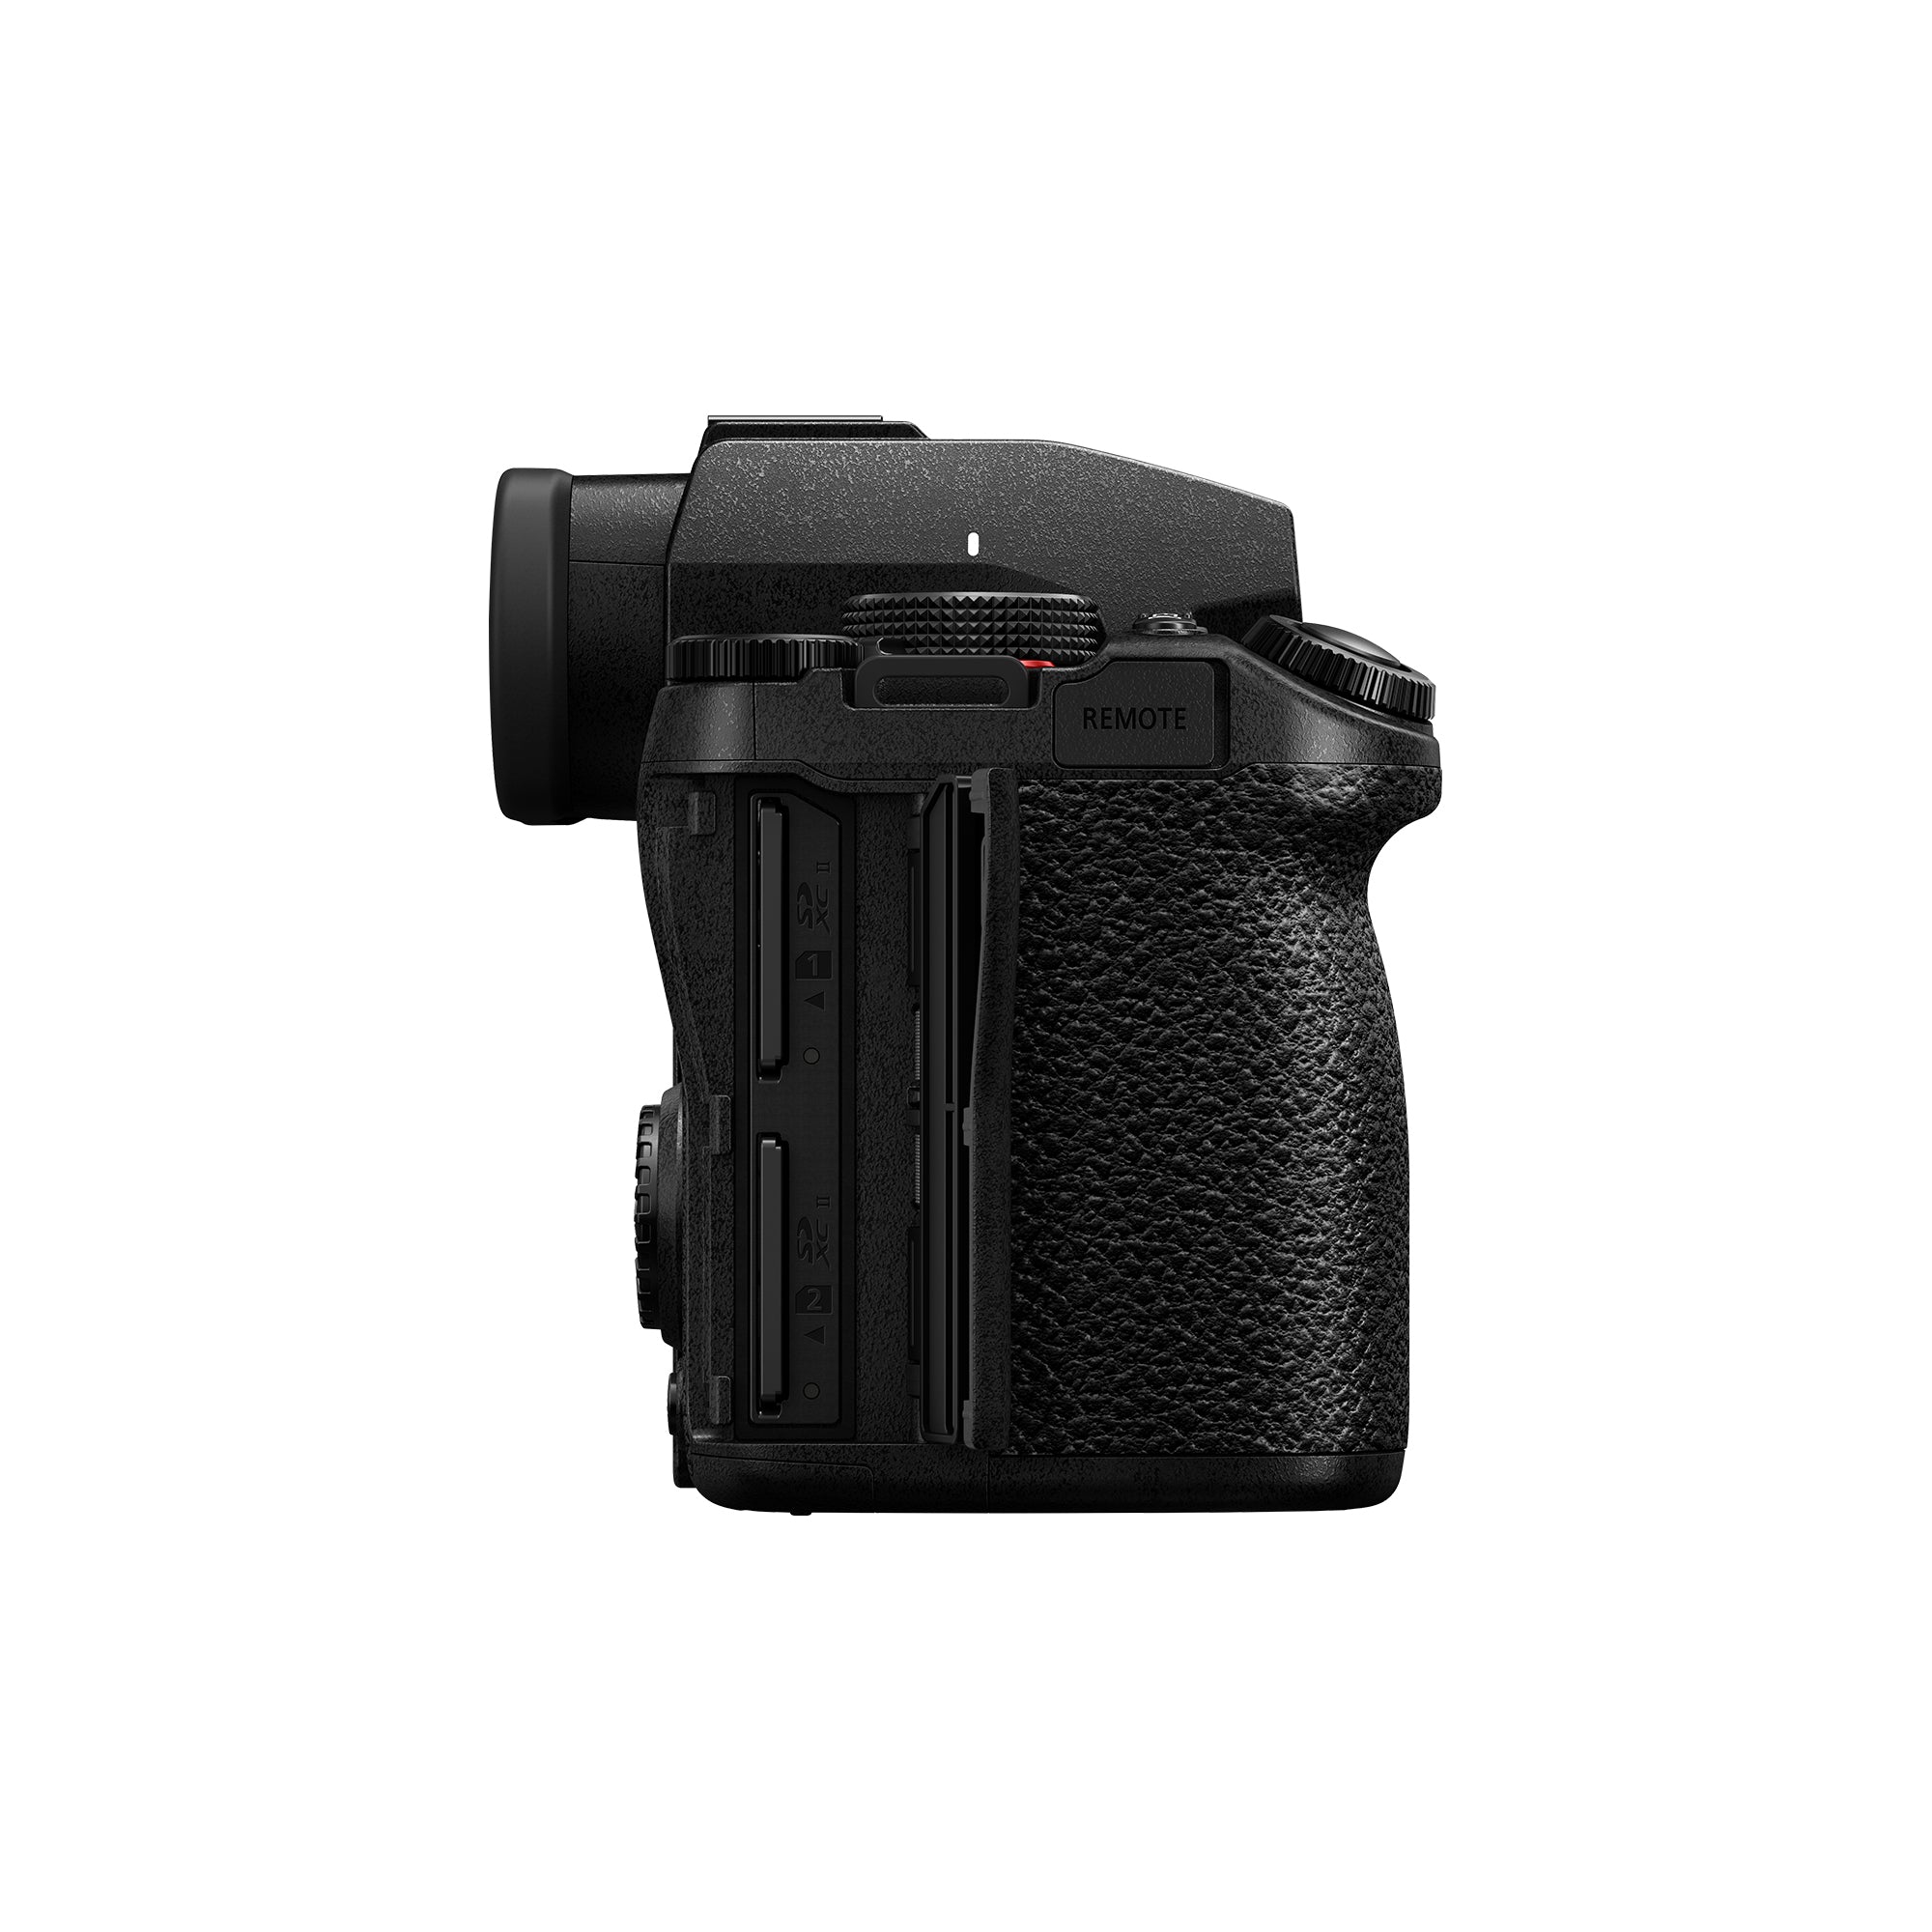 Panasonic LUMIX G9M2 Mirrorless Camera with 12-60mm F2.8-4.0 Lens -  DC-G9M2LK